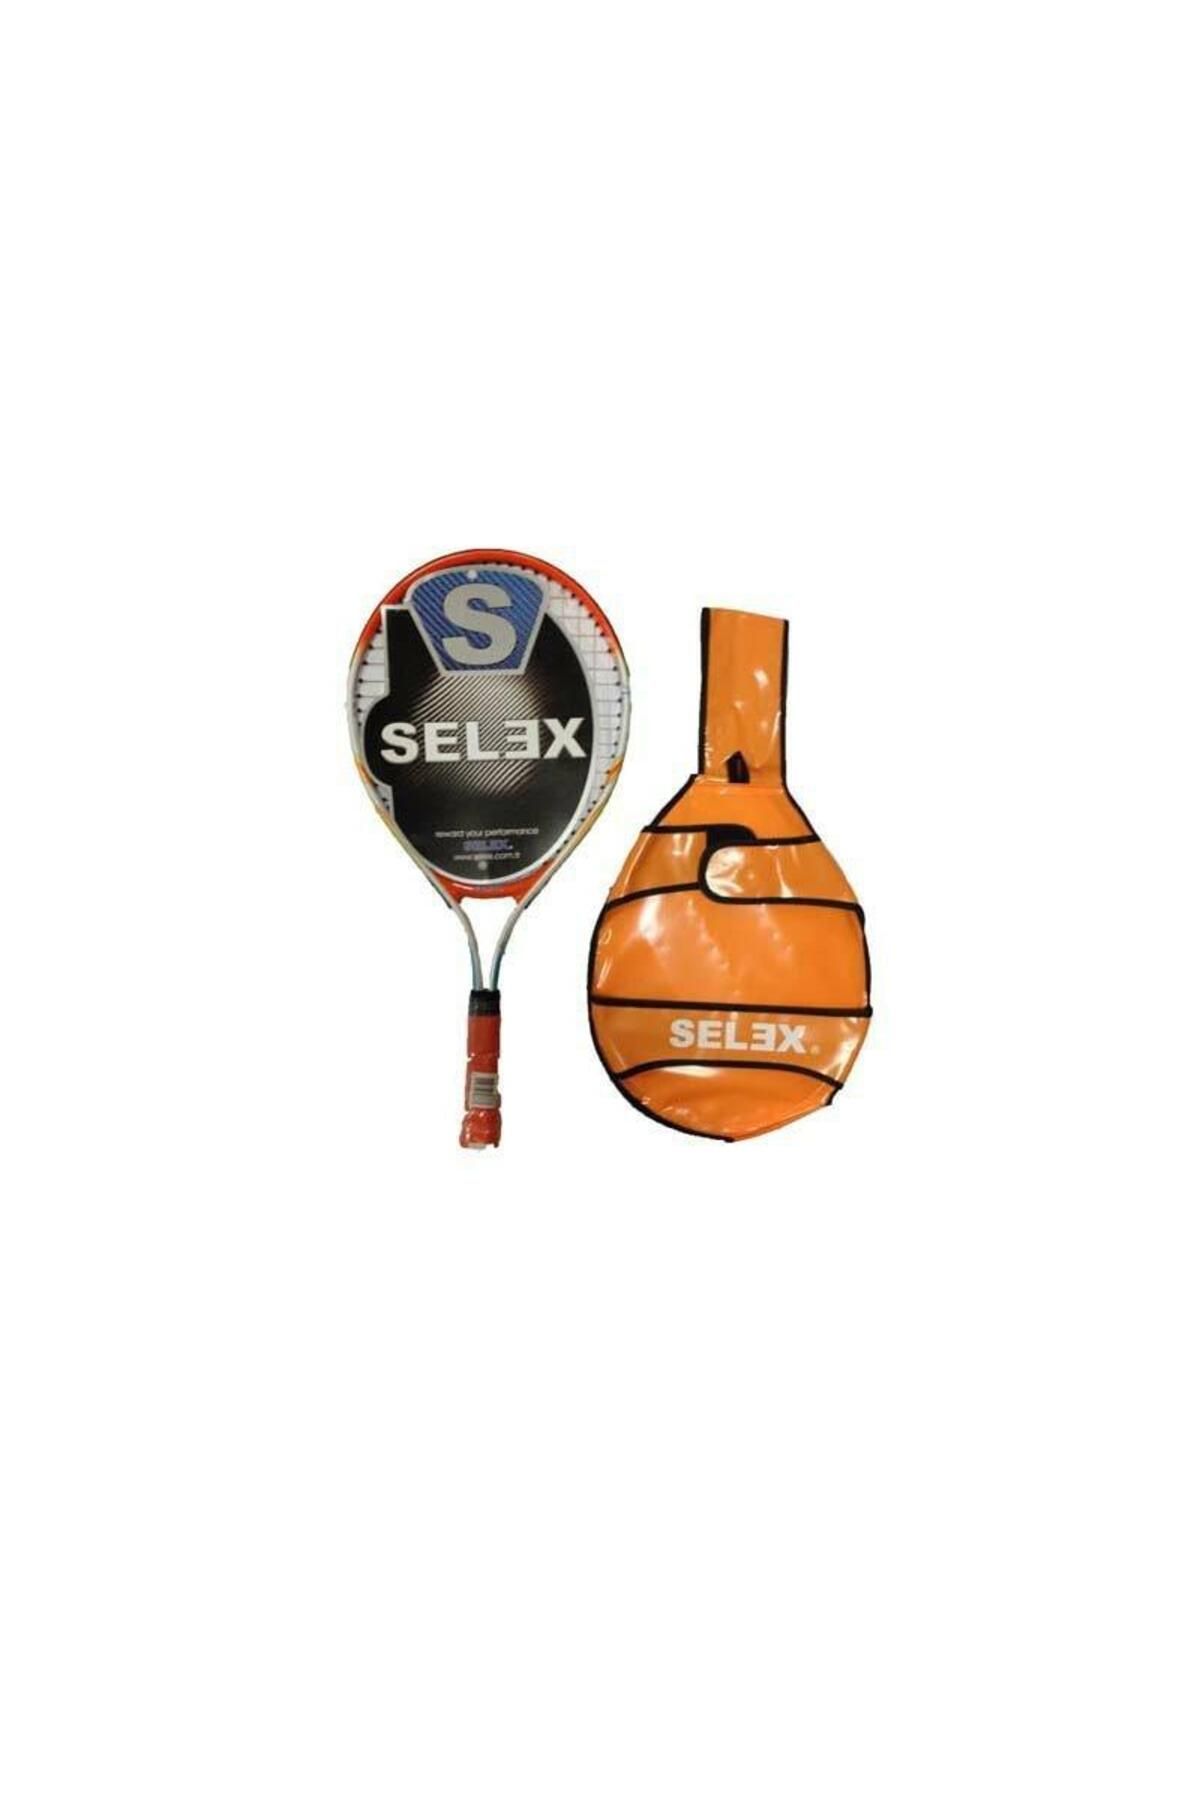 SELEX Star 21 Tenis Raketi 8697666703837